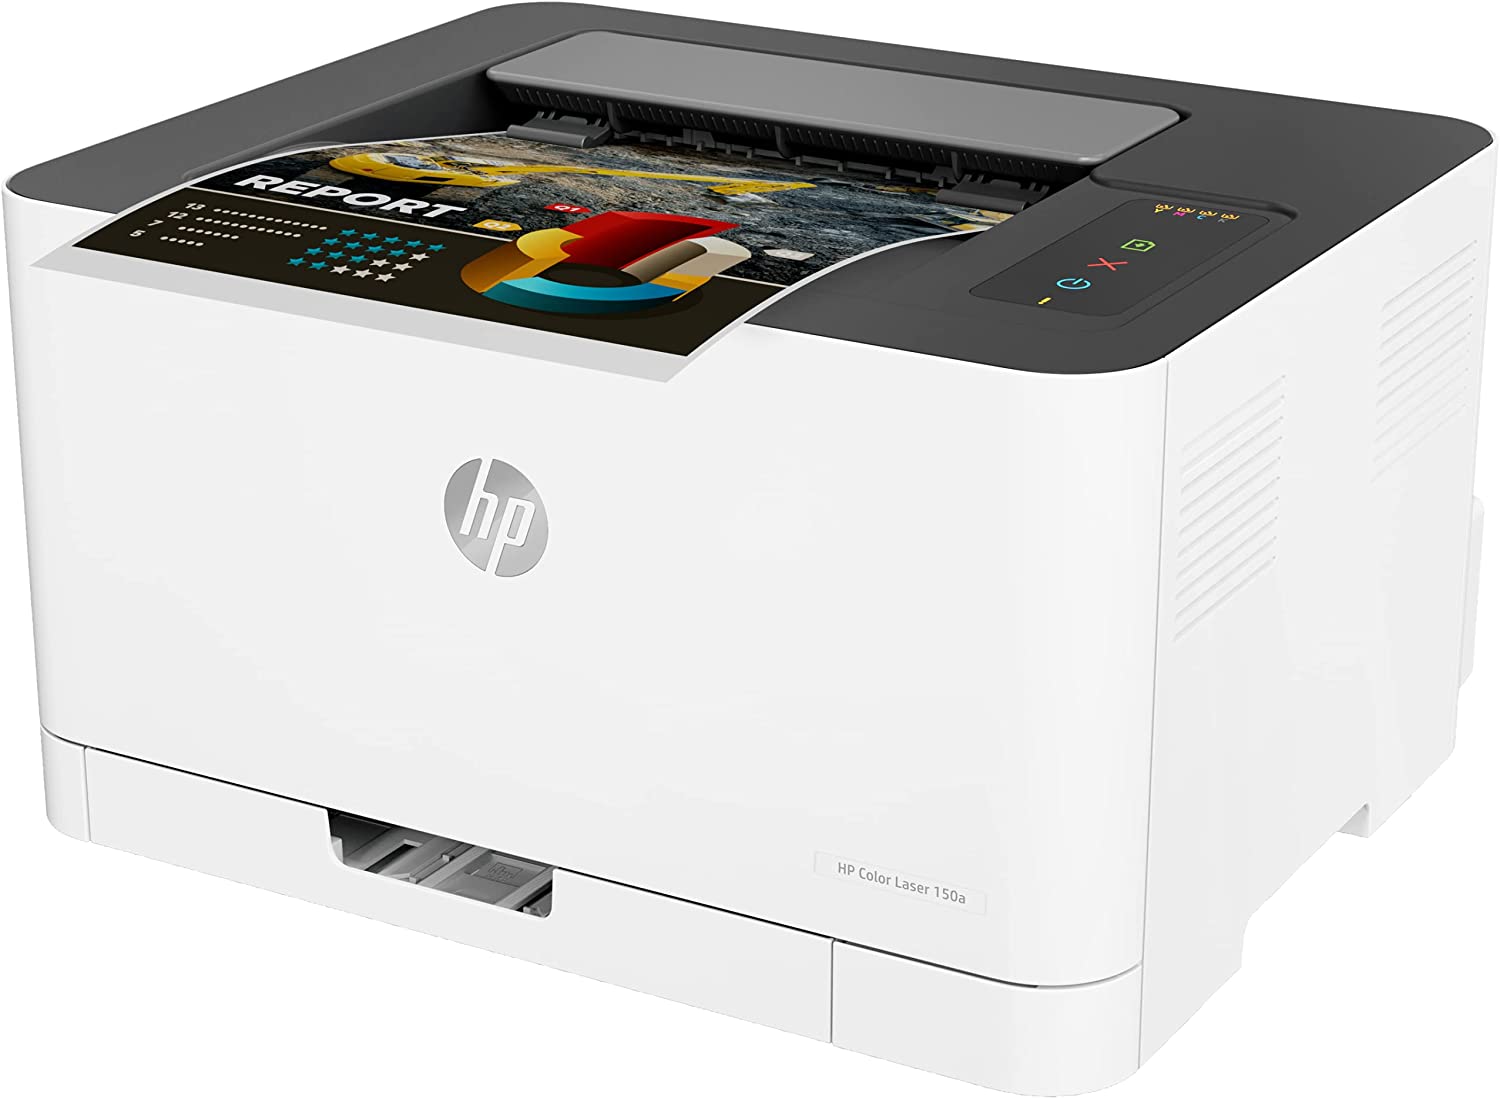 HP Color Laser 150a toner